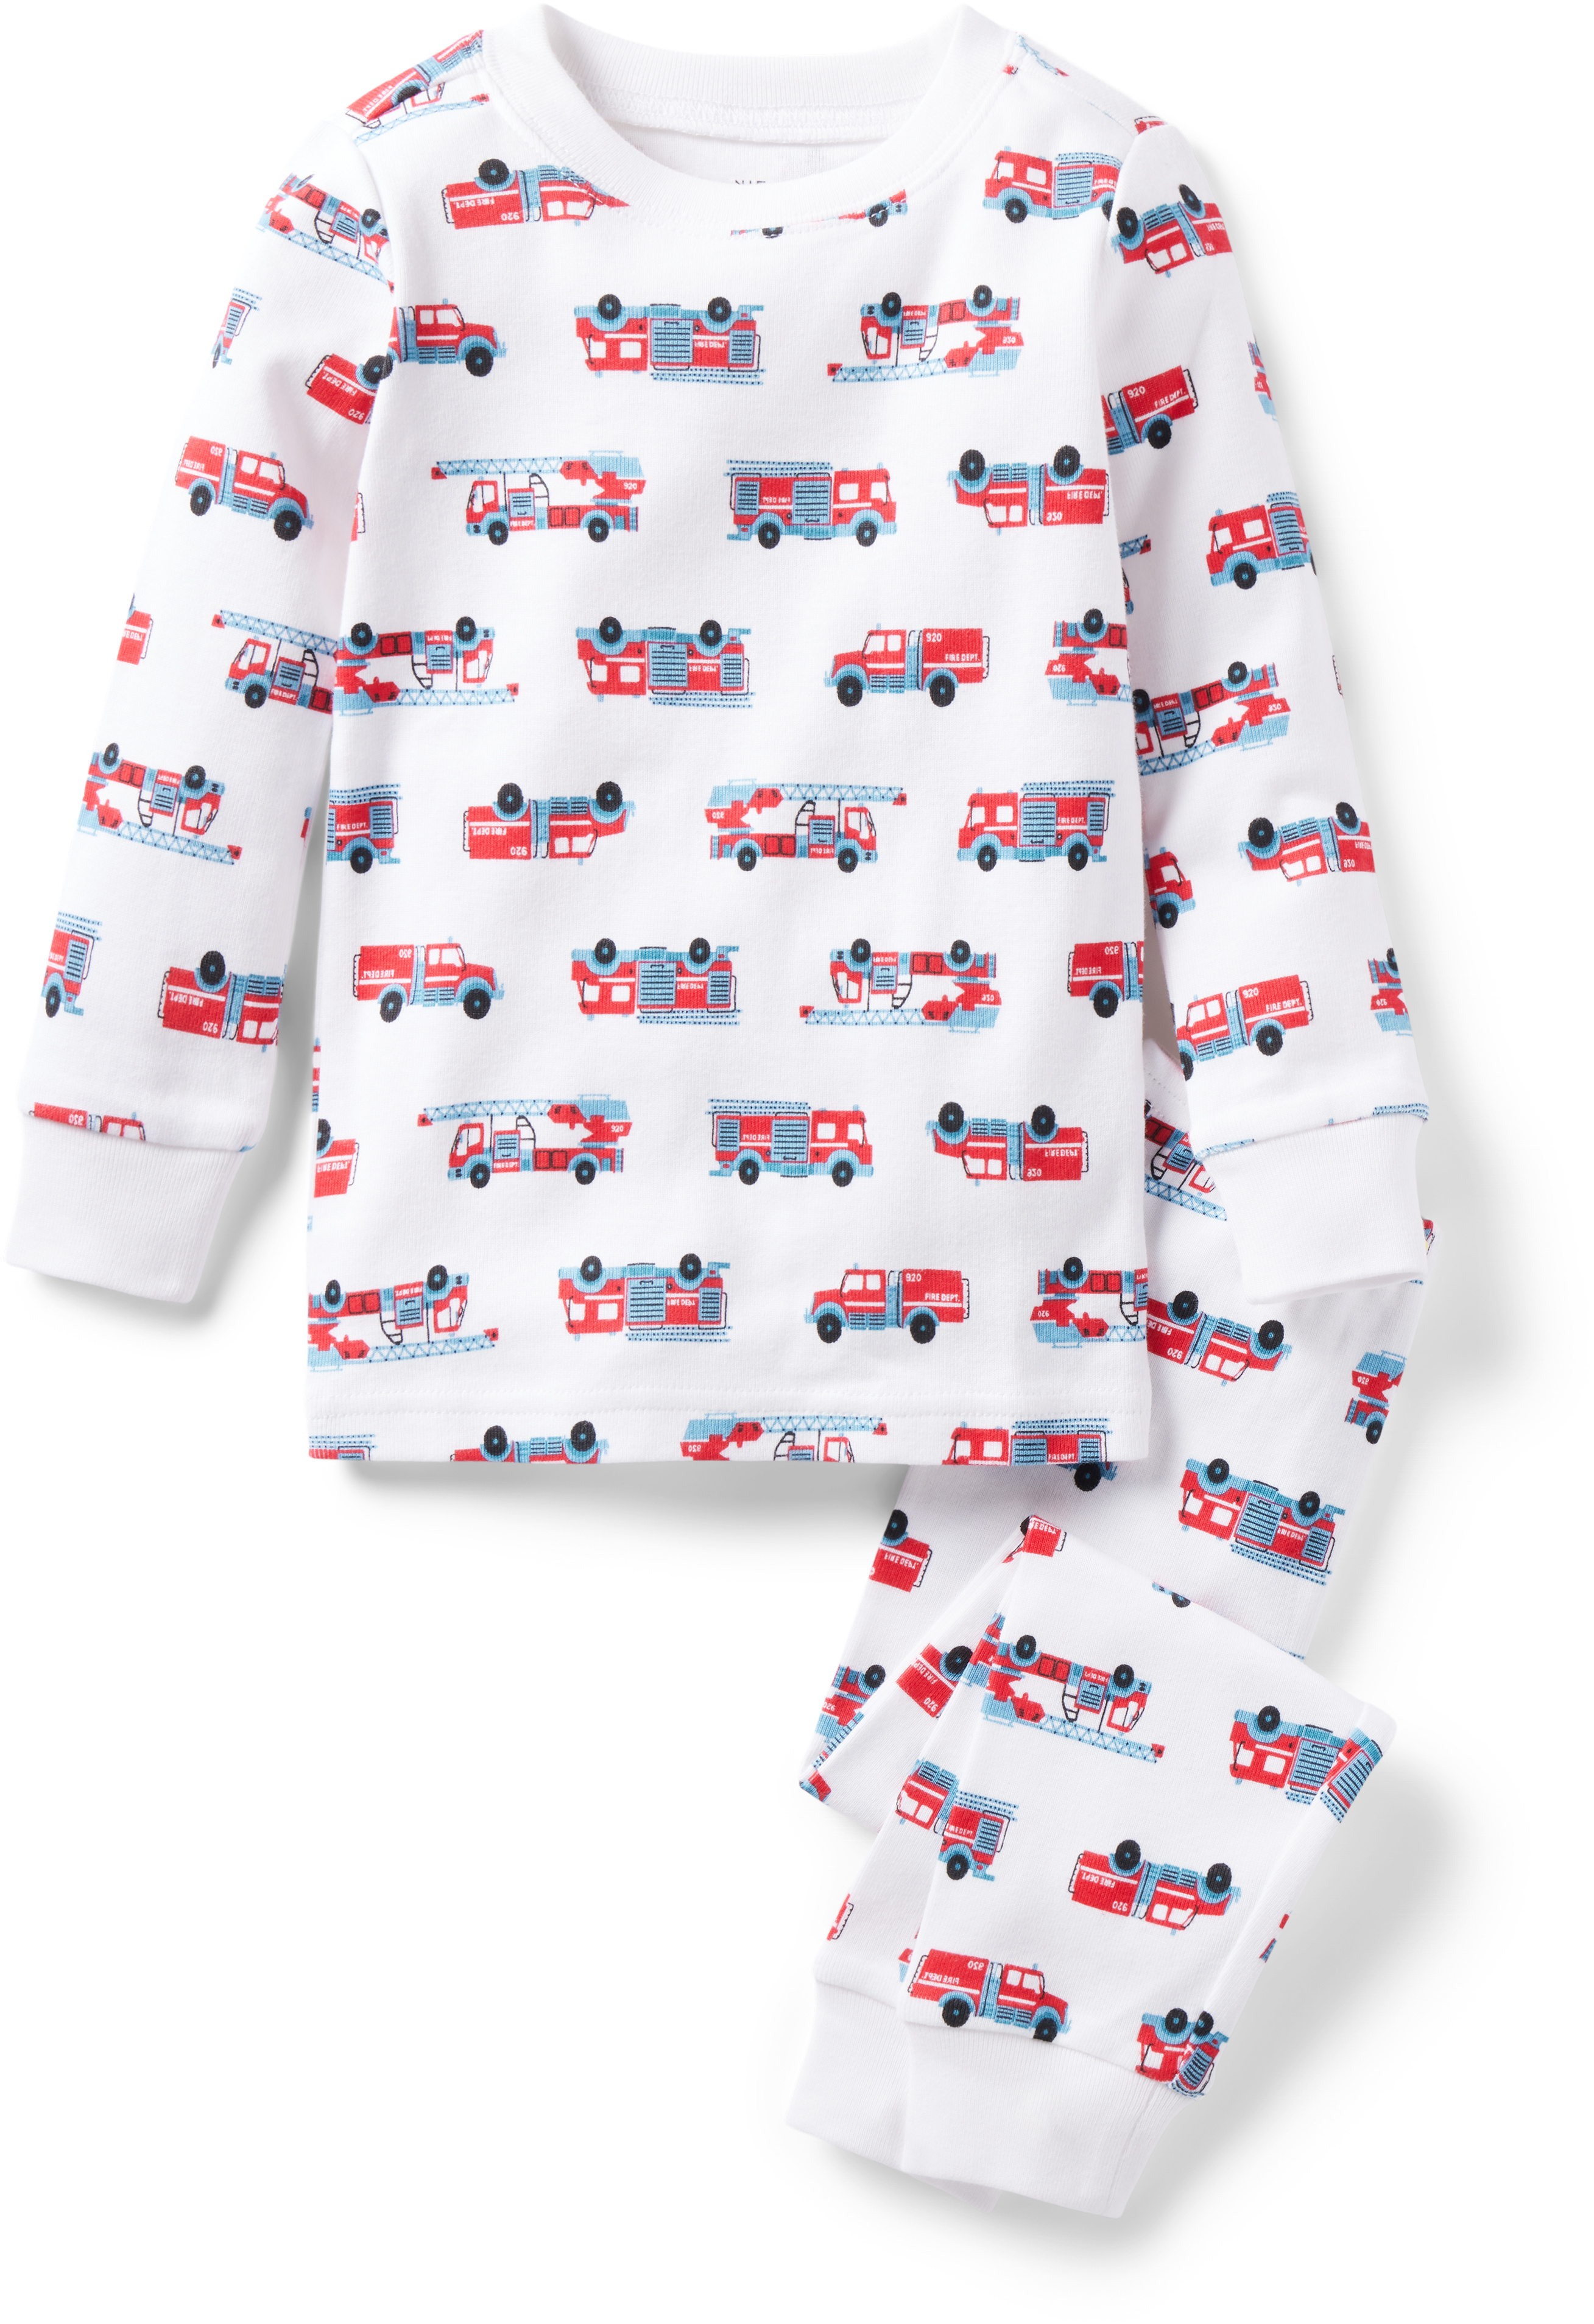 Firetruck Tight Fit Sleepwear (Toddler/Little Kids/Big Kids) Janie and Jack